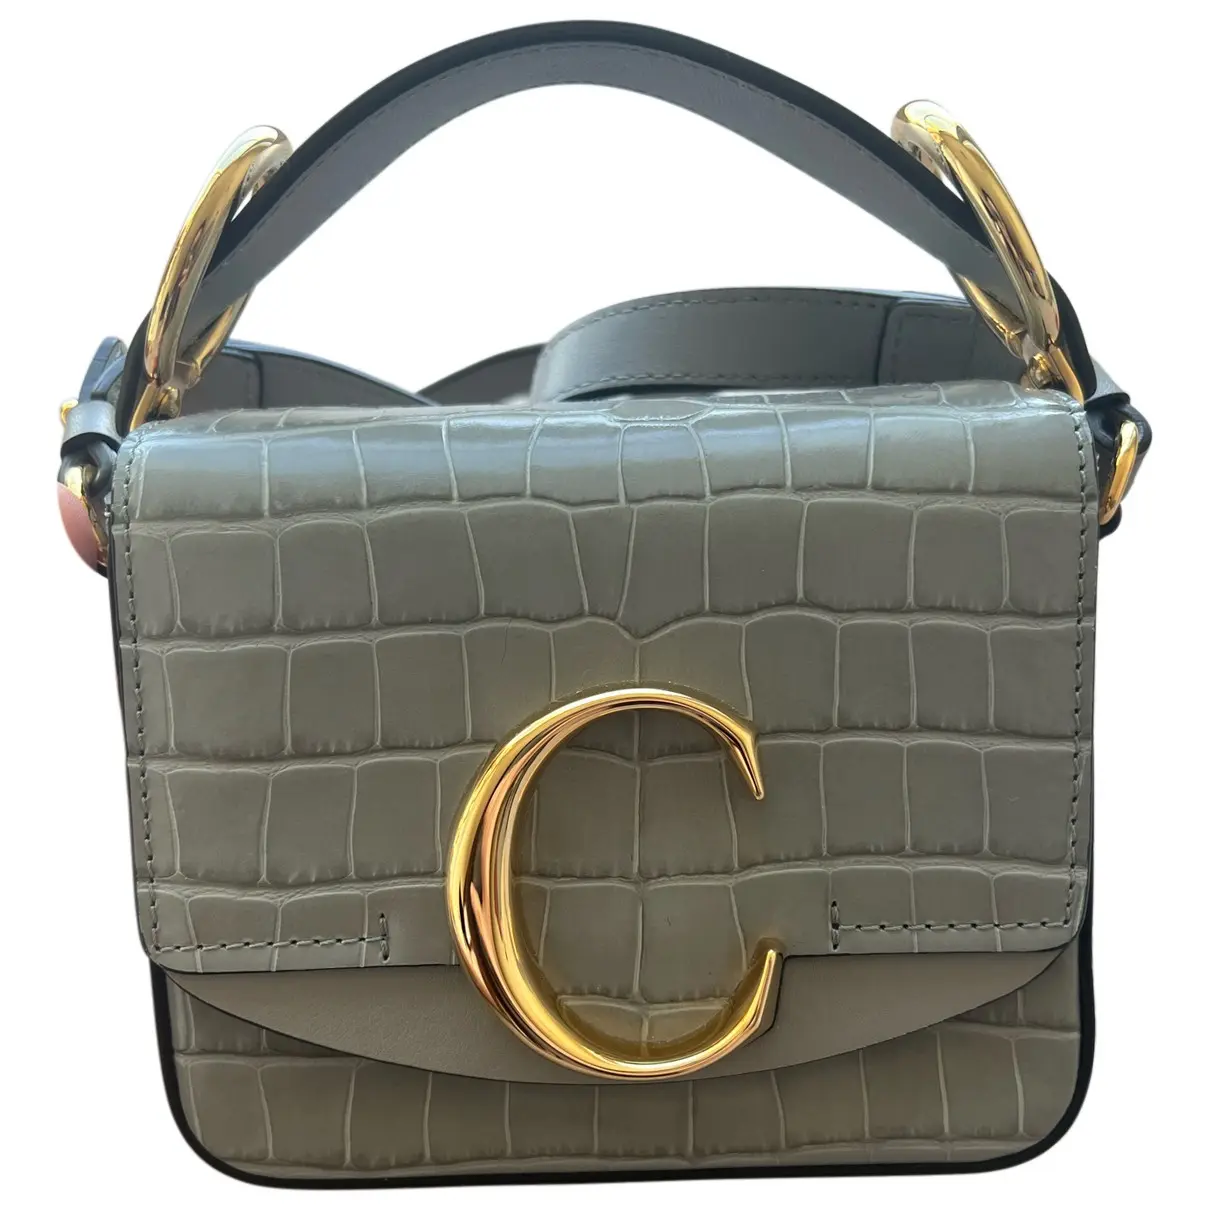 C leather crossbody bag Chloé